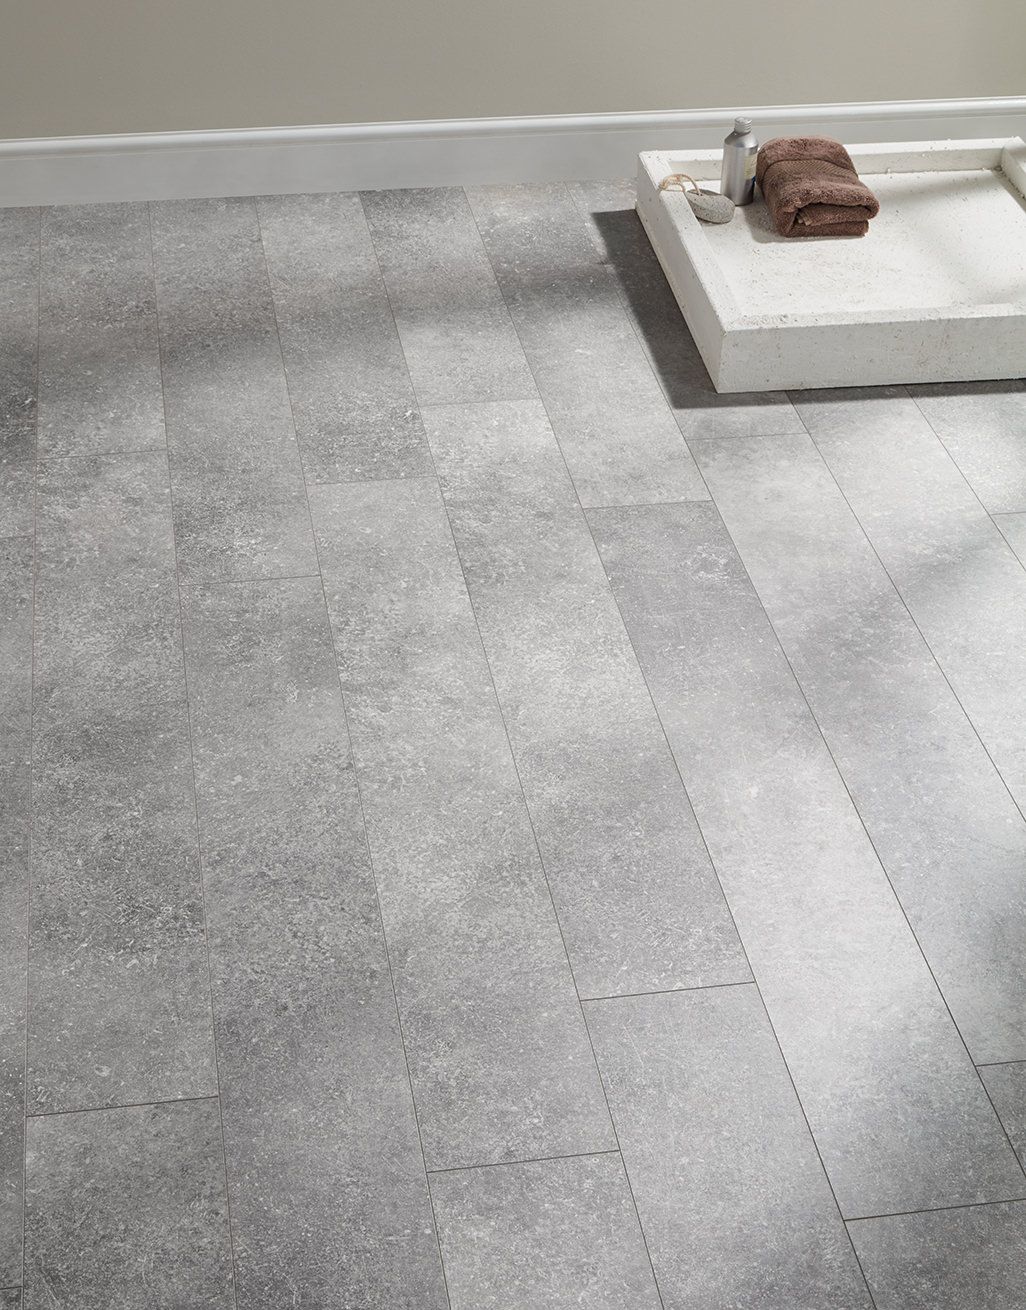 Valencia Tile Weathered Grey Laminate, Laminate That Looks Like Tile Flooring